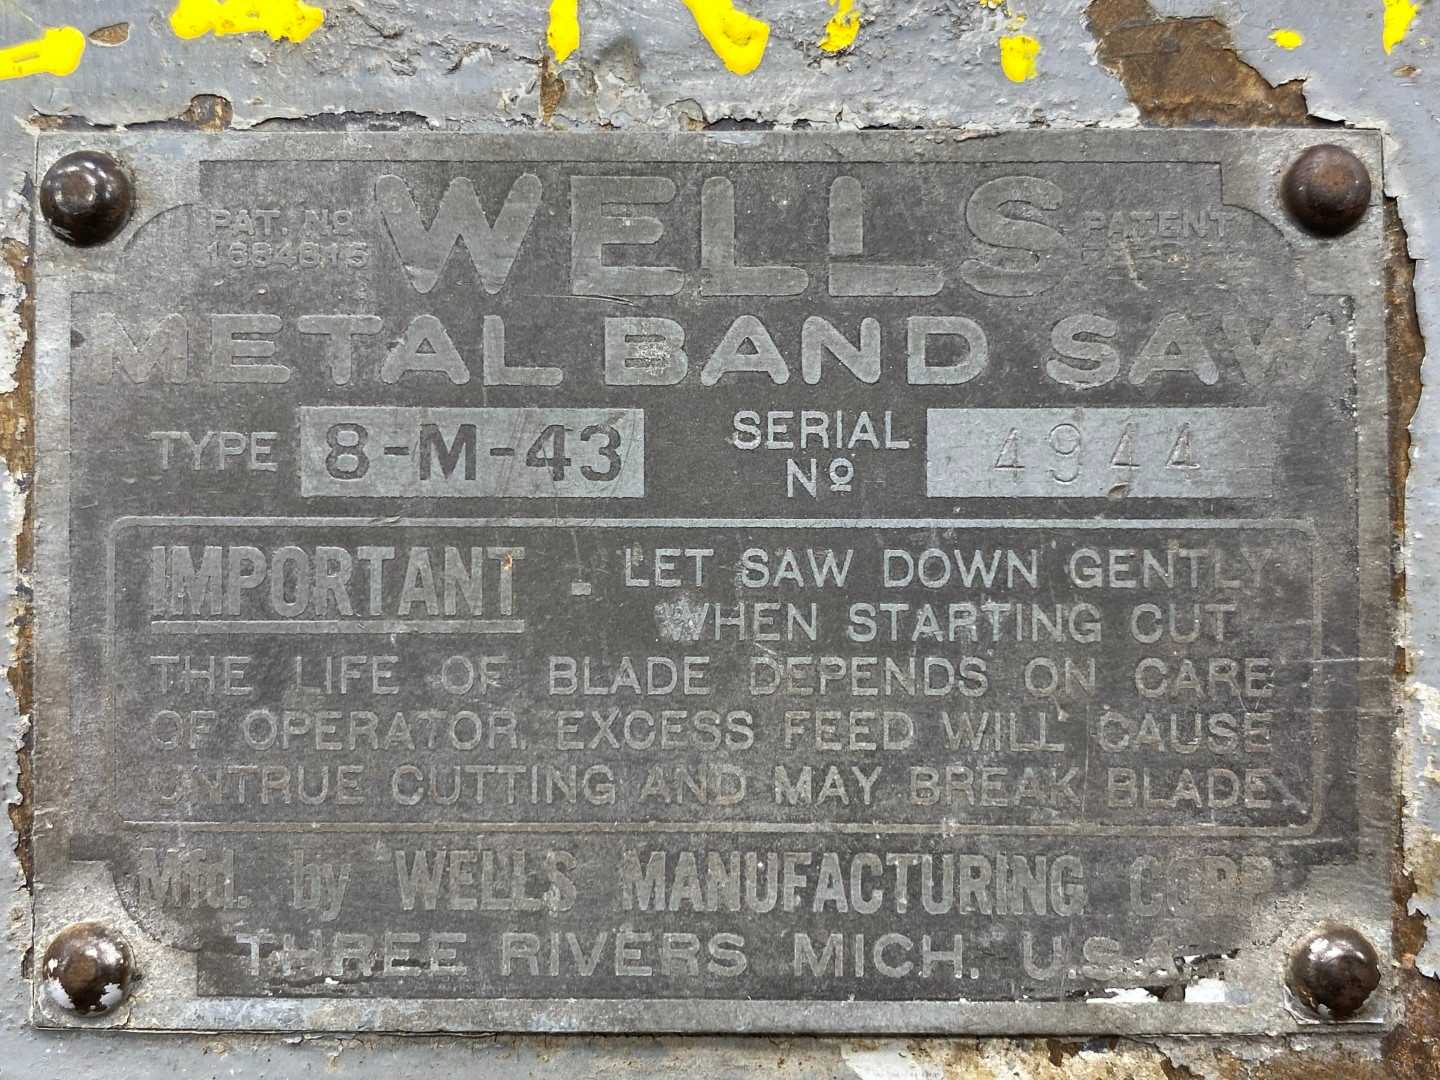 Wells Horizontal Metal Band Saw 8-M-43